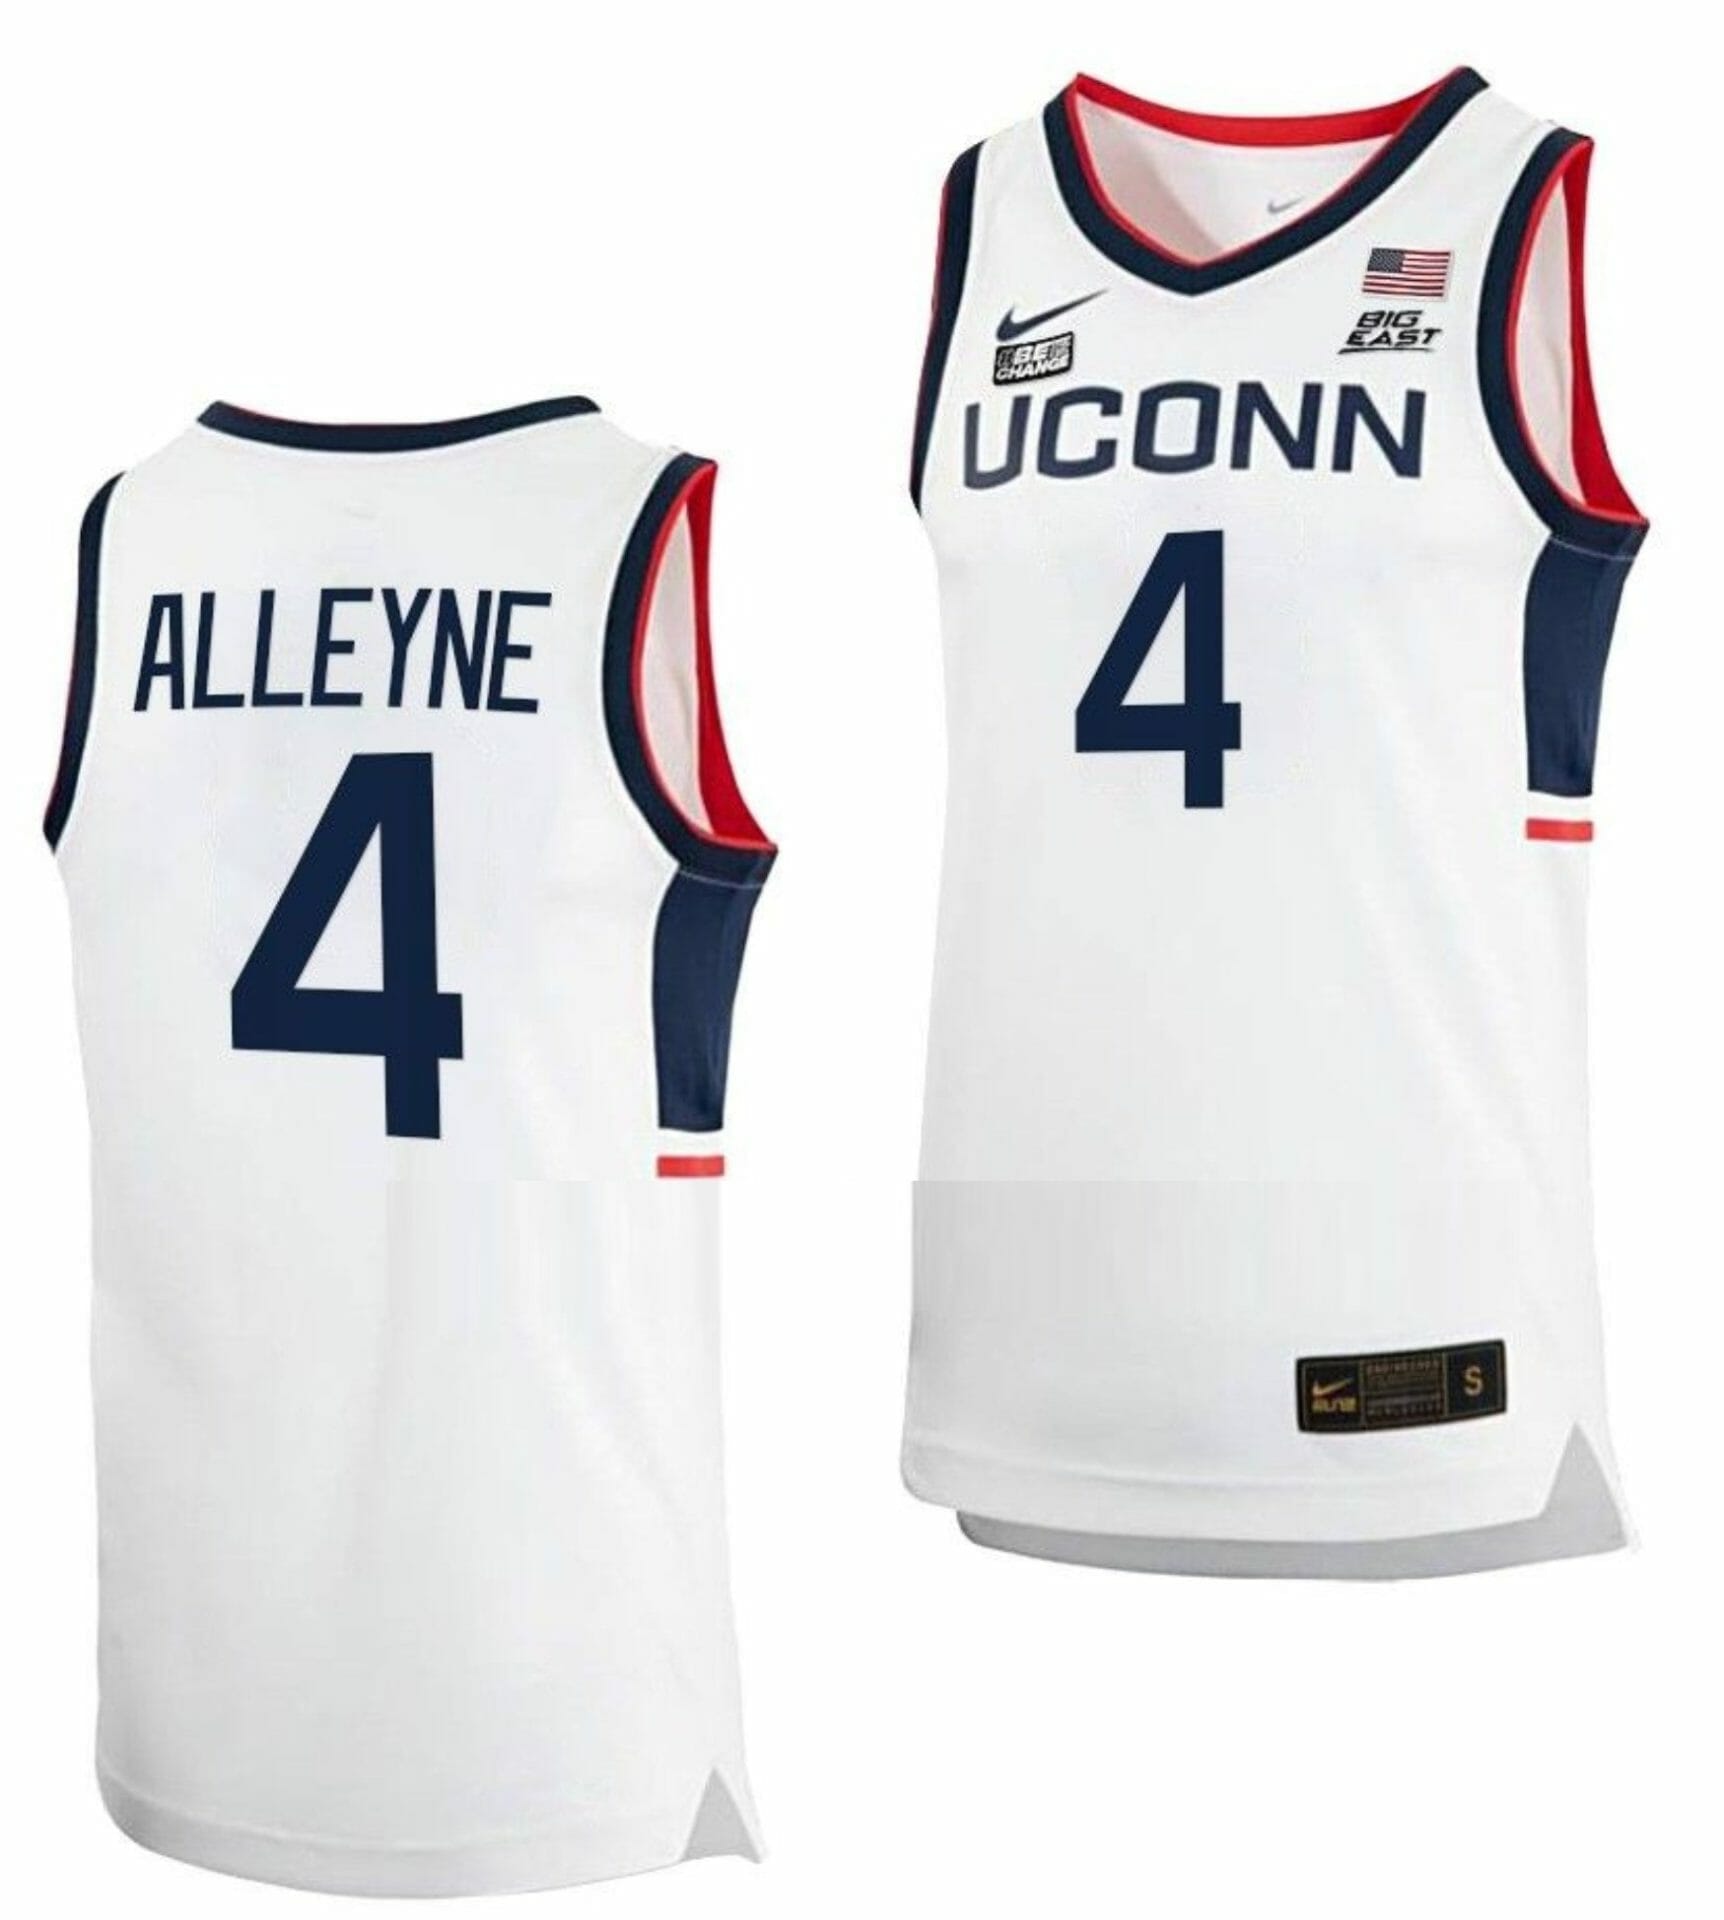 UConn Huskies College Basketball Jersey #1 NCAA Jerseys Away Navy